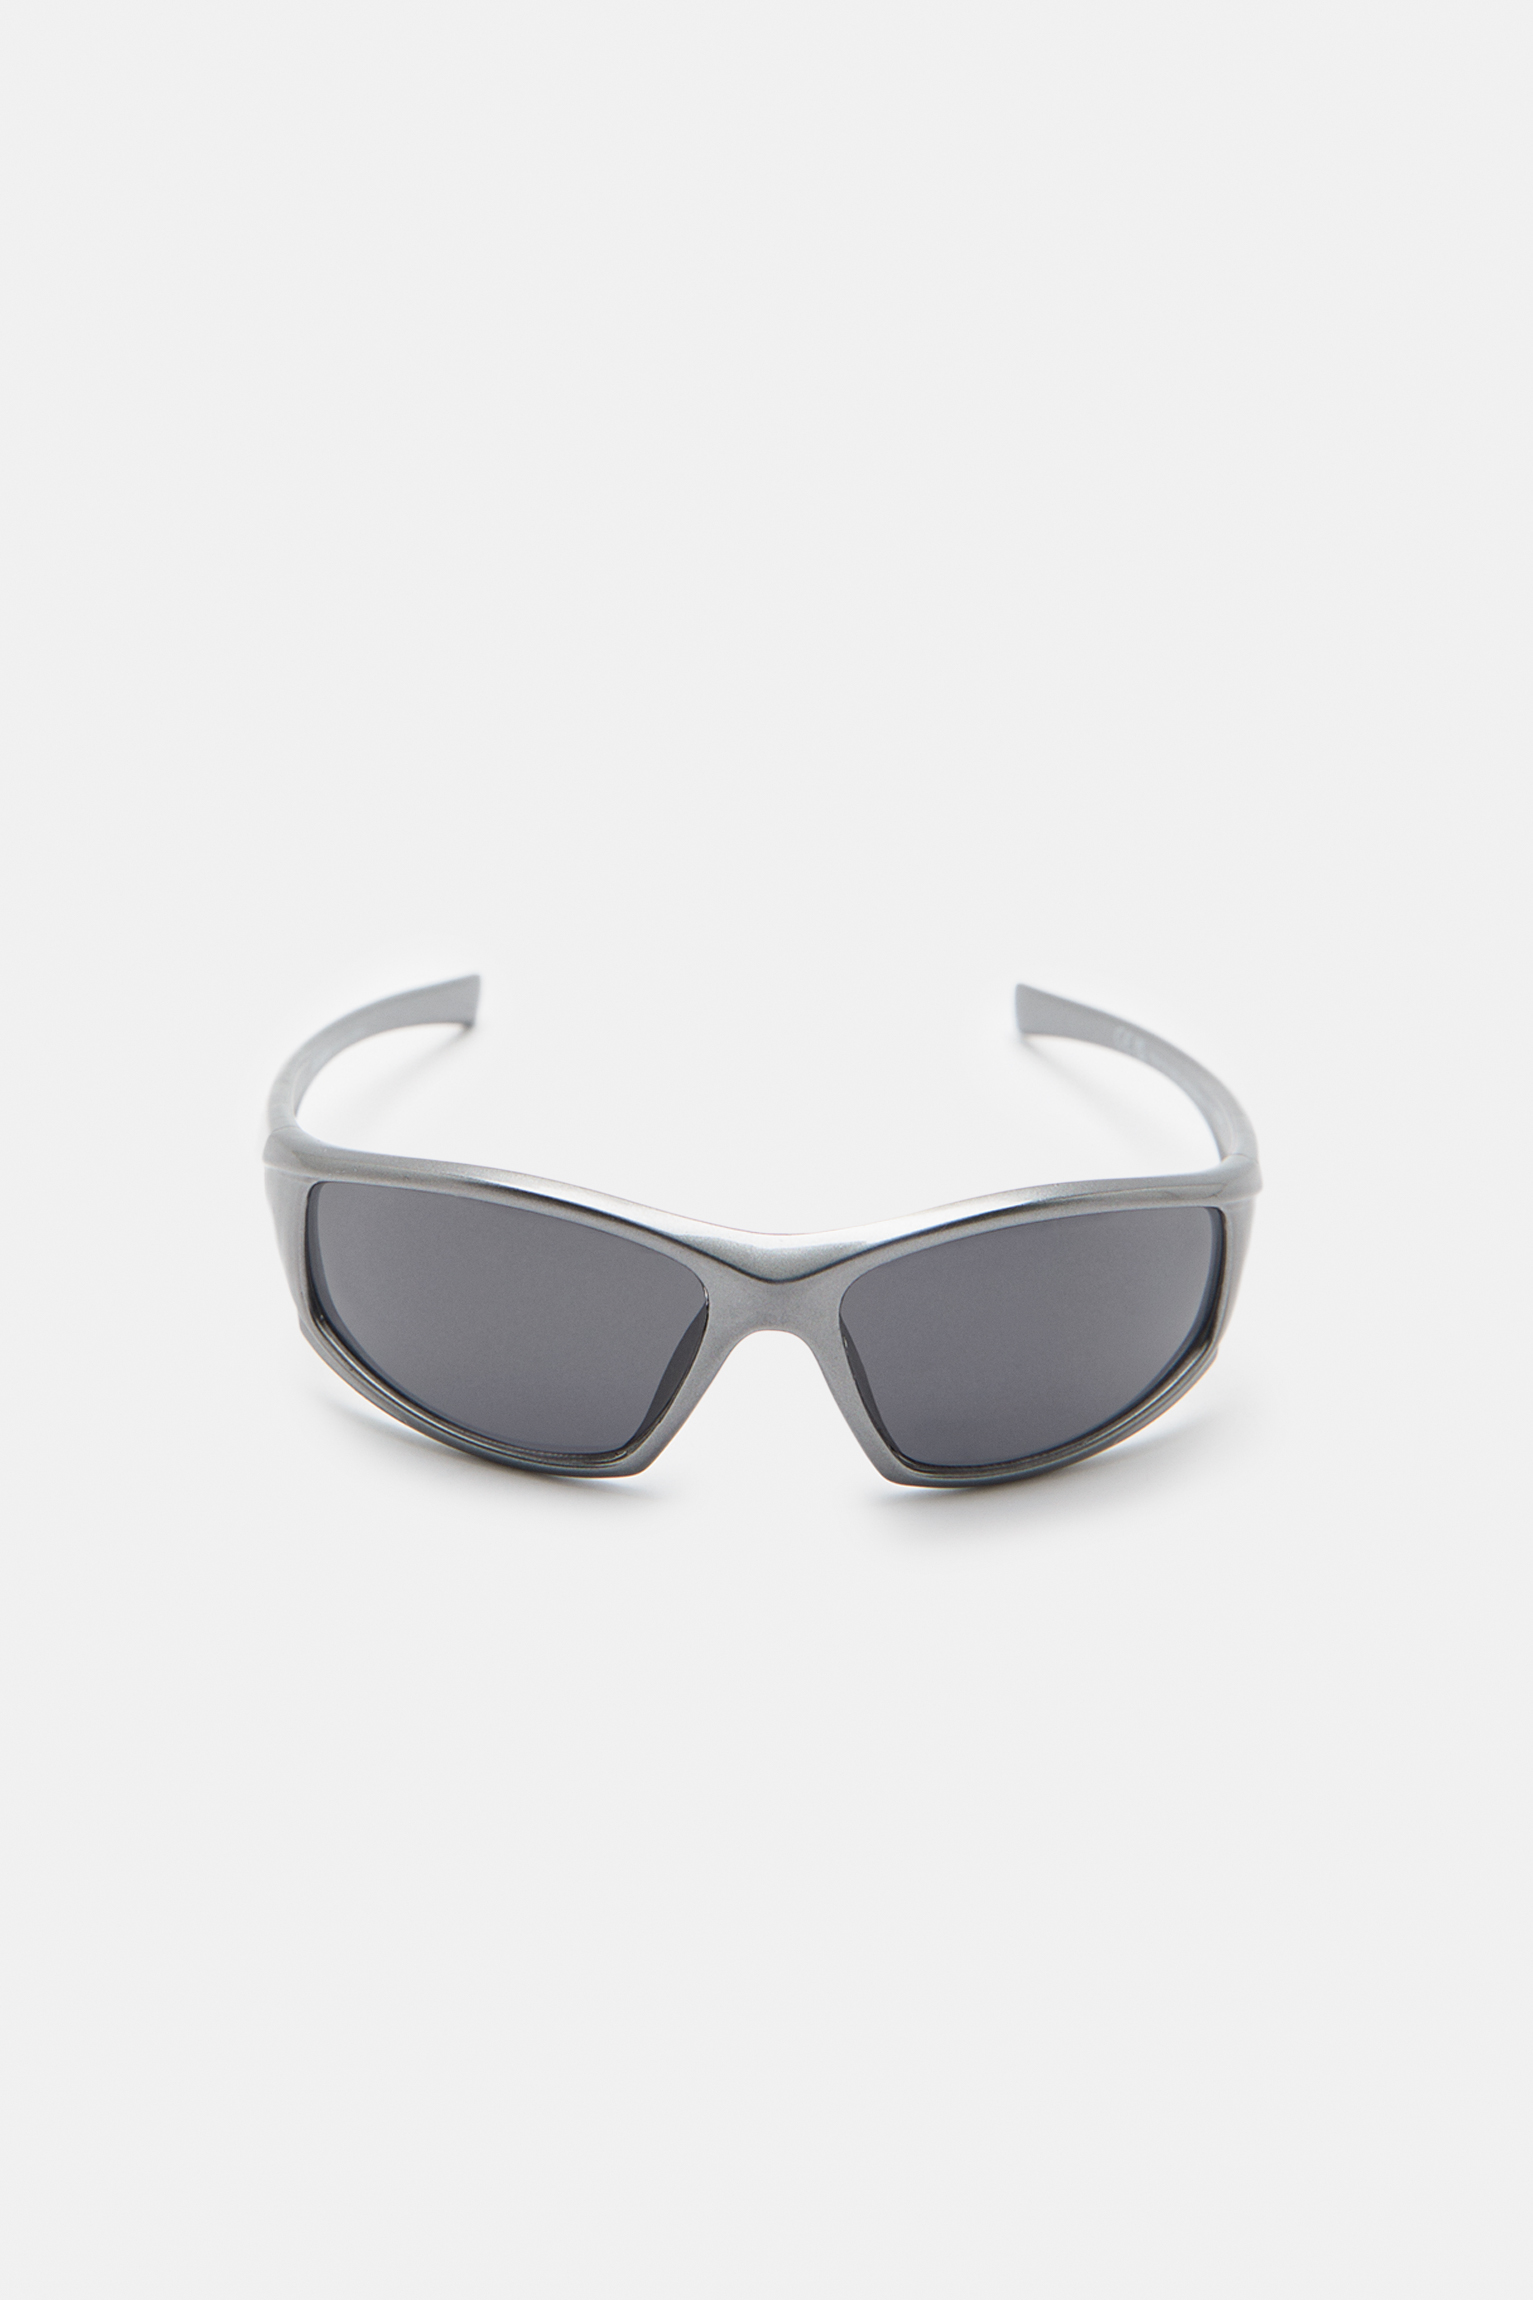 RockBros Polarized Cycling Sunglasses Bike Goggles Outdoor Sport Glasses  price in Egypt | Amazon Egypt | kanbkam